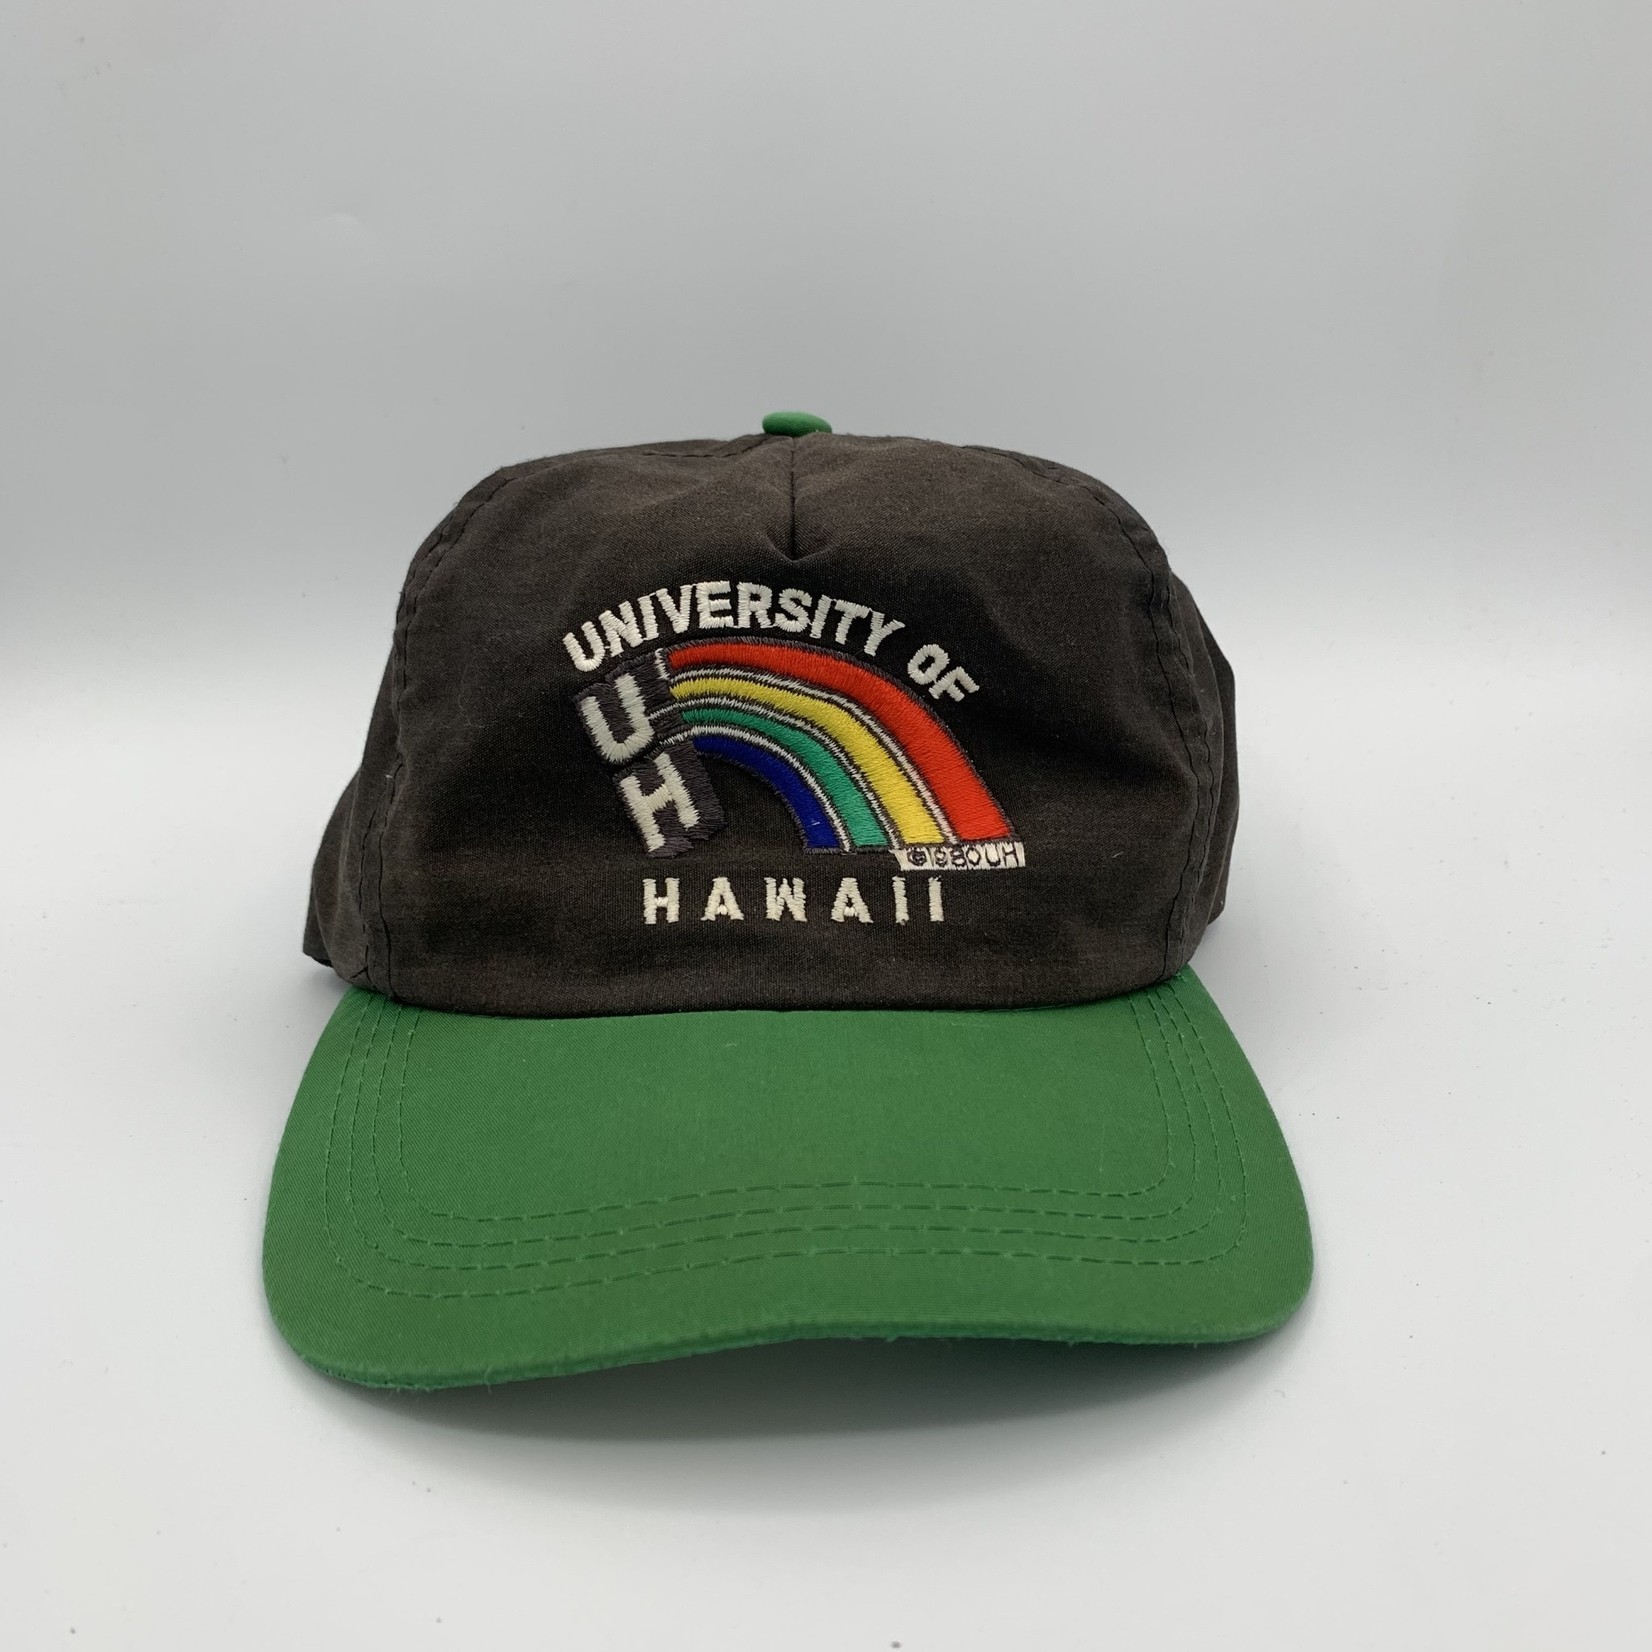 Mission Zero Vintage Collectors  University of Hawaii 1980’s Hat